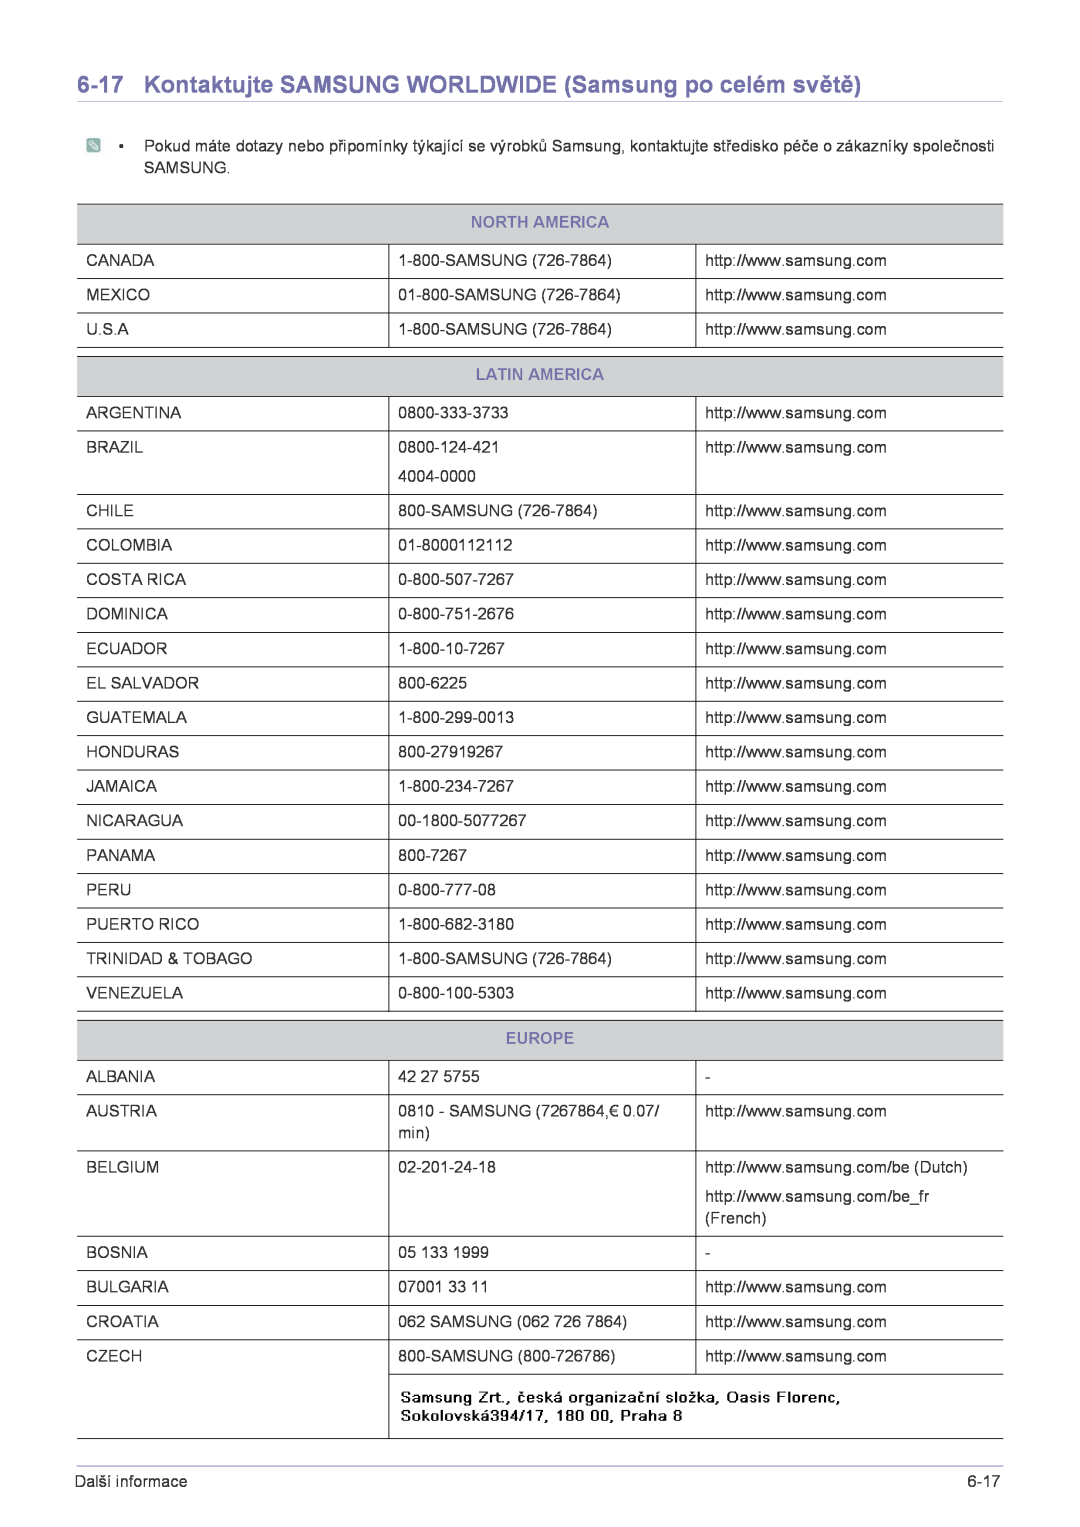 Samsung LS20A300NS/EN manual Kontaktujte SAMSUNG WORLDWIDE Samsung po celém světě, North America, Latin America, Europe 